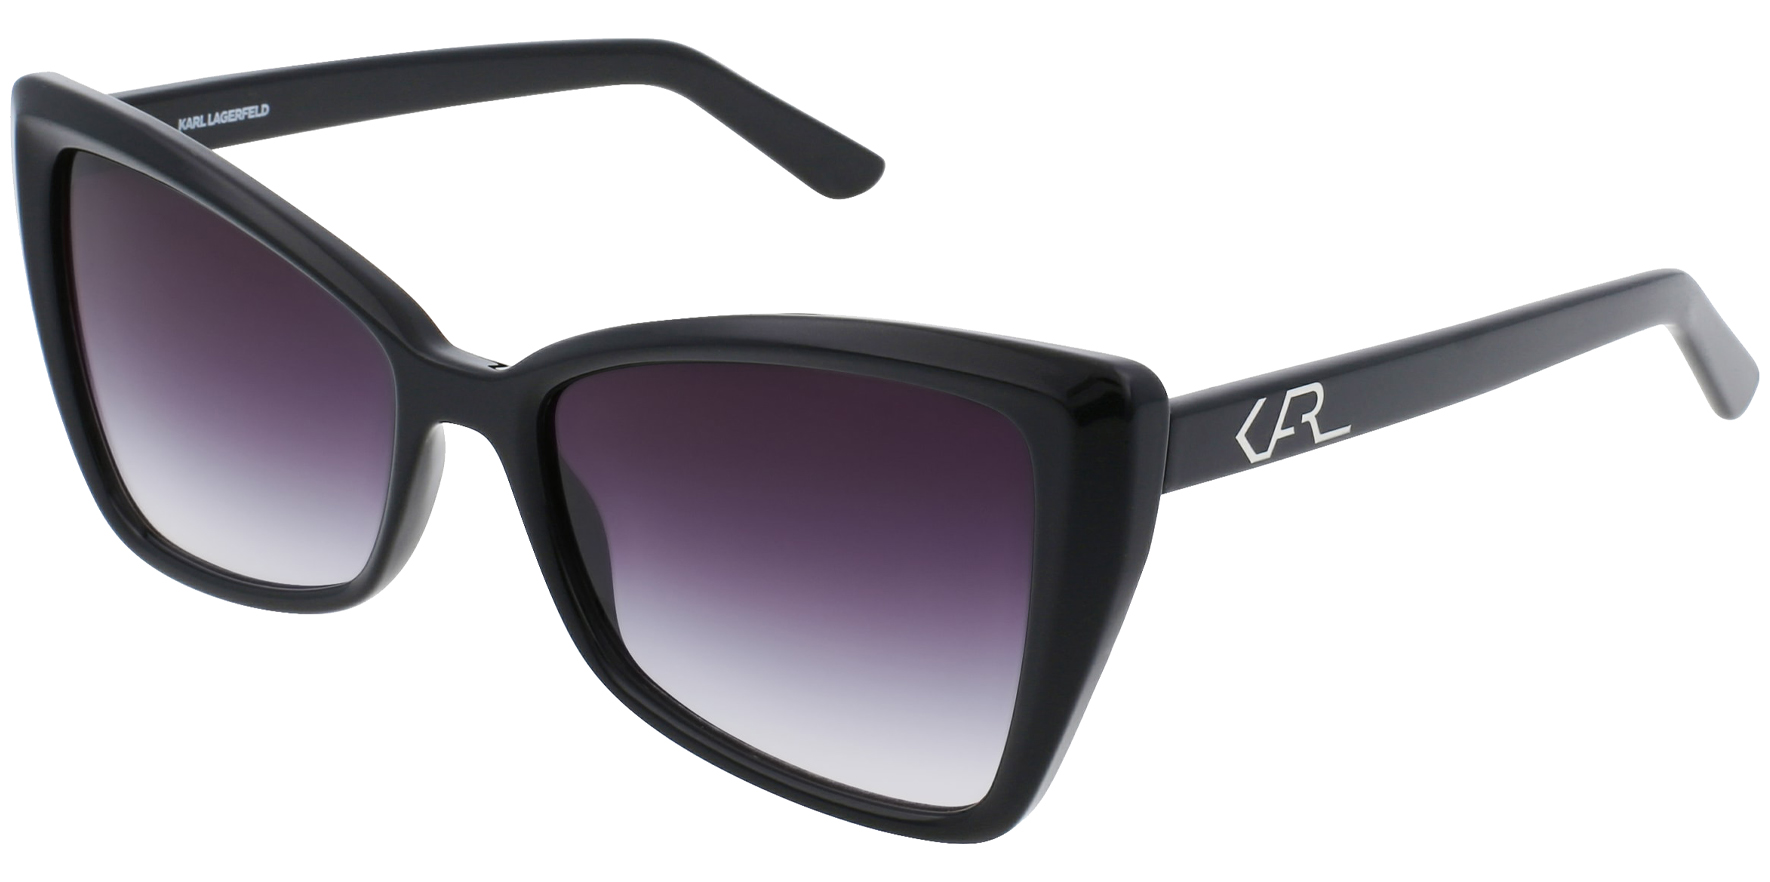 EOK 12 Red Polarized Sunglasses Foster Grant e/o Summer Discount Deal! |  eBay